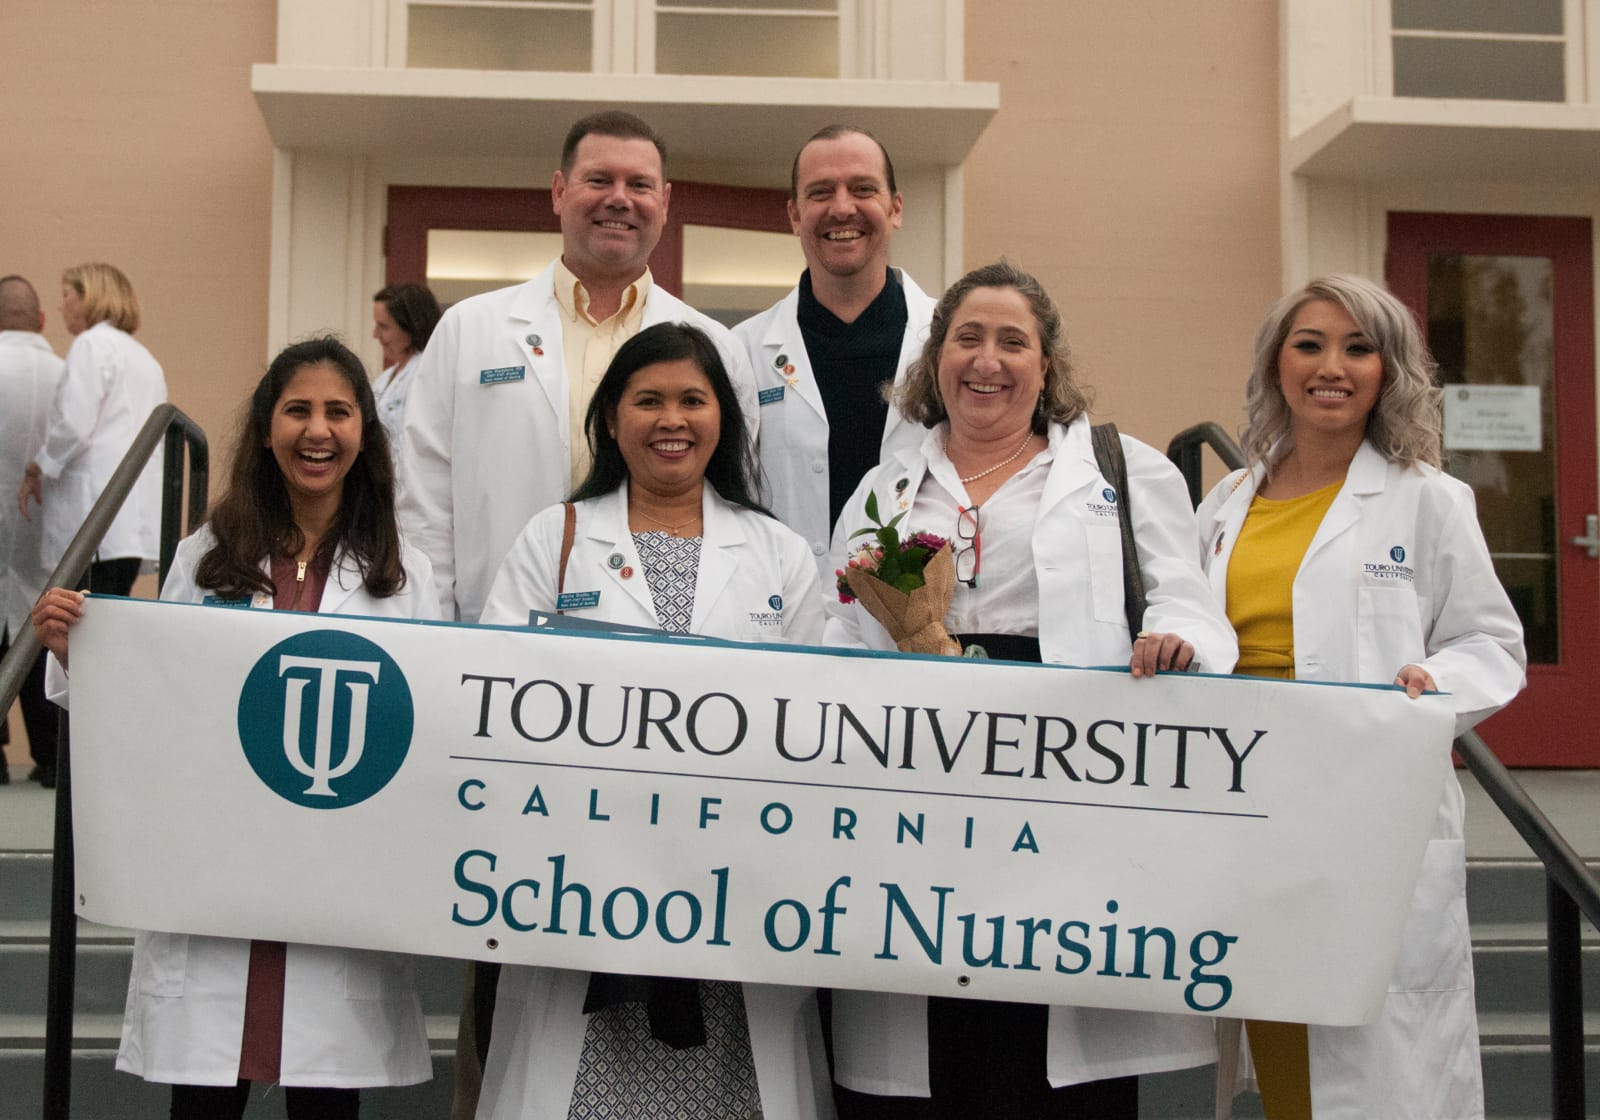 TUC nursing students in white coats posing